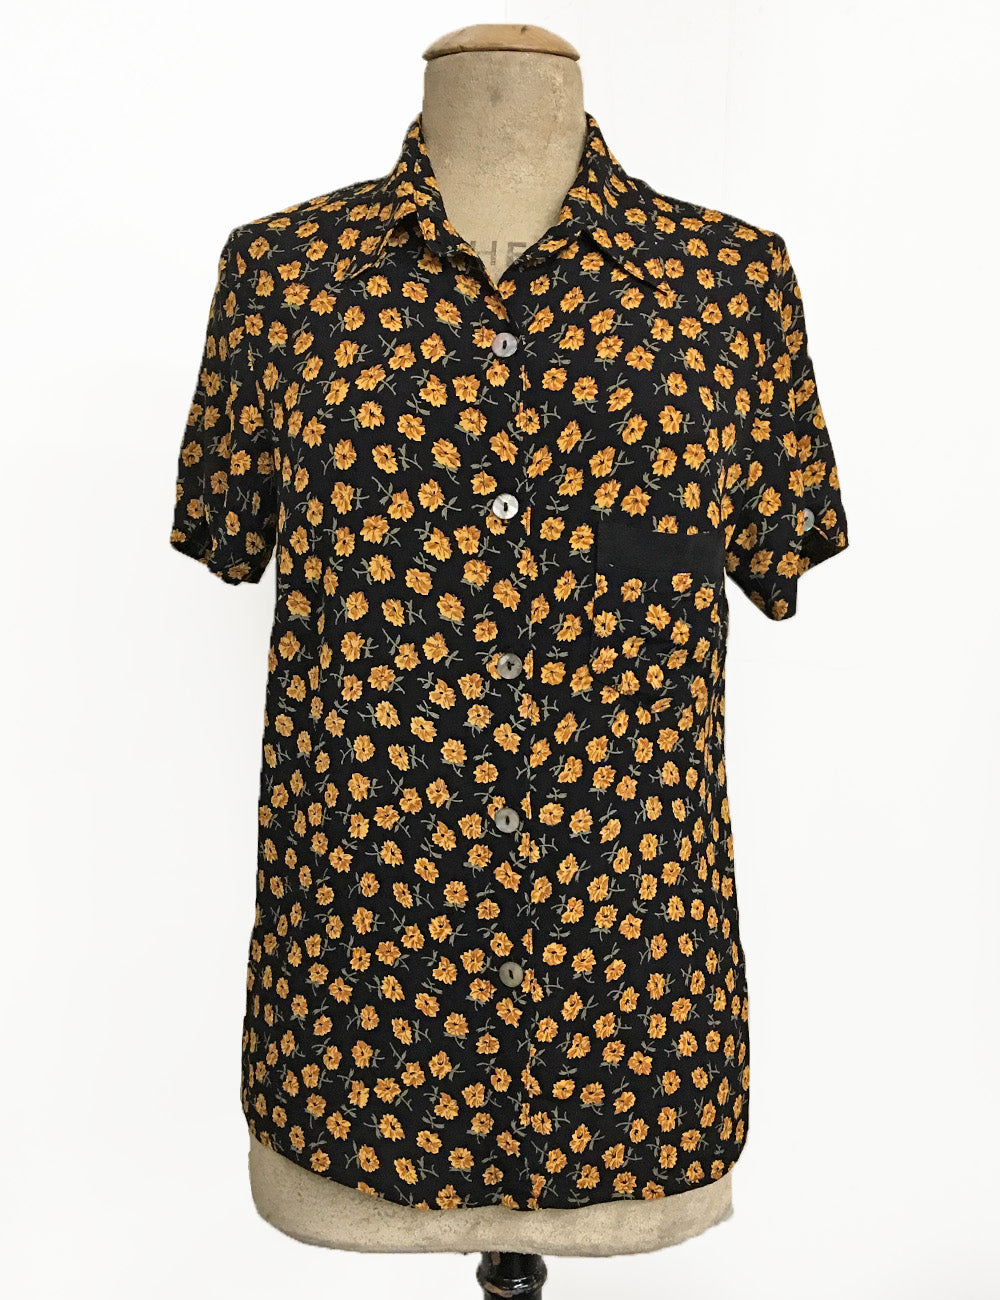 Dandelion Print Button Up Short Sleeve Camp Shirt